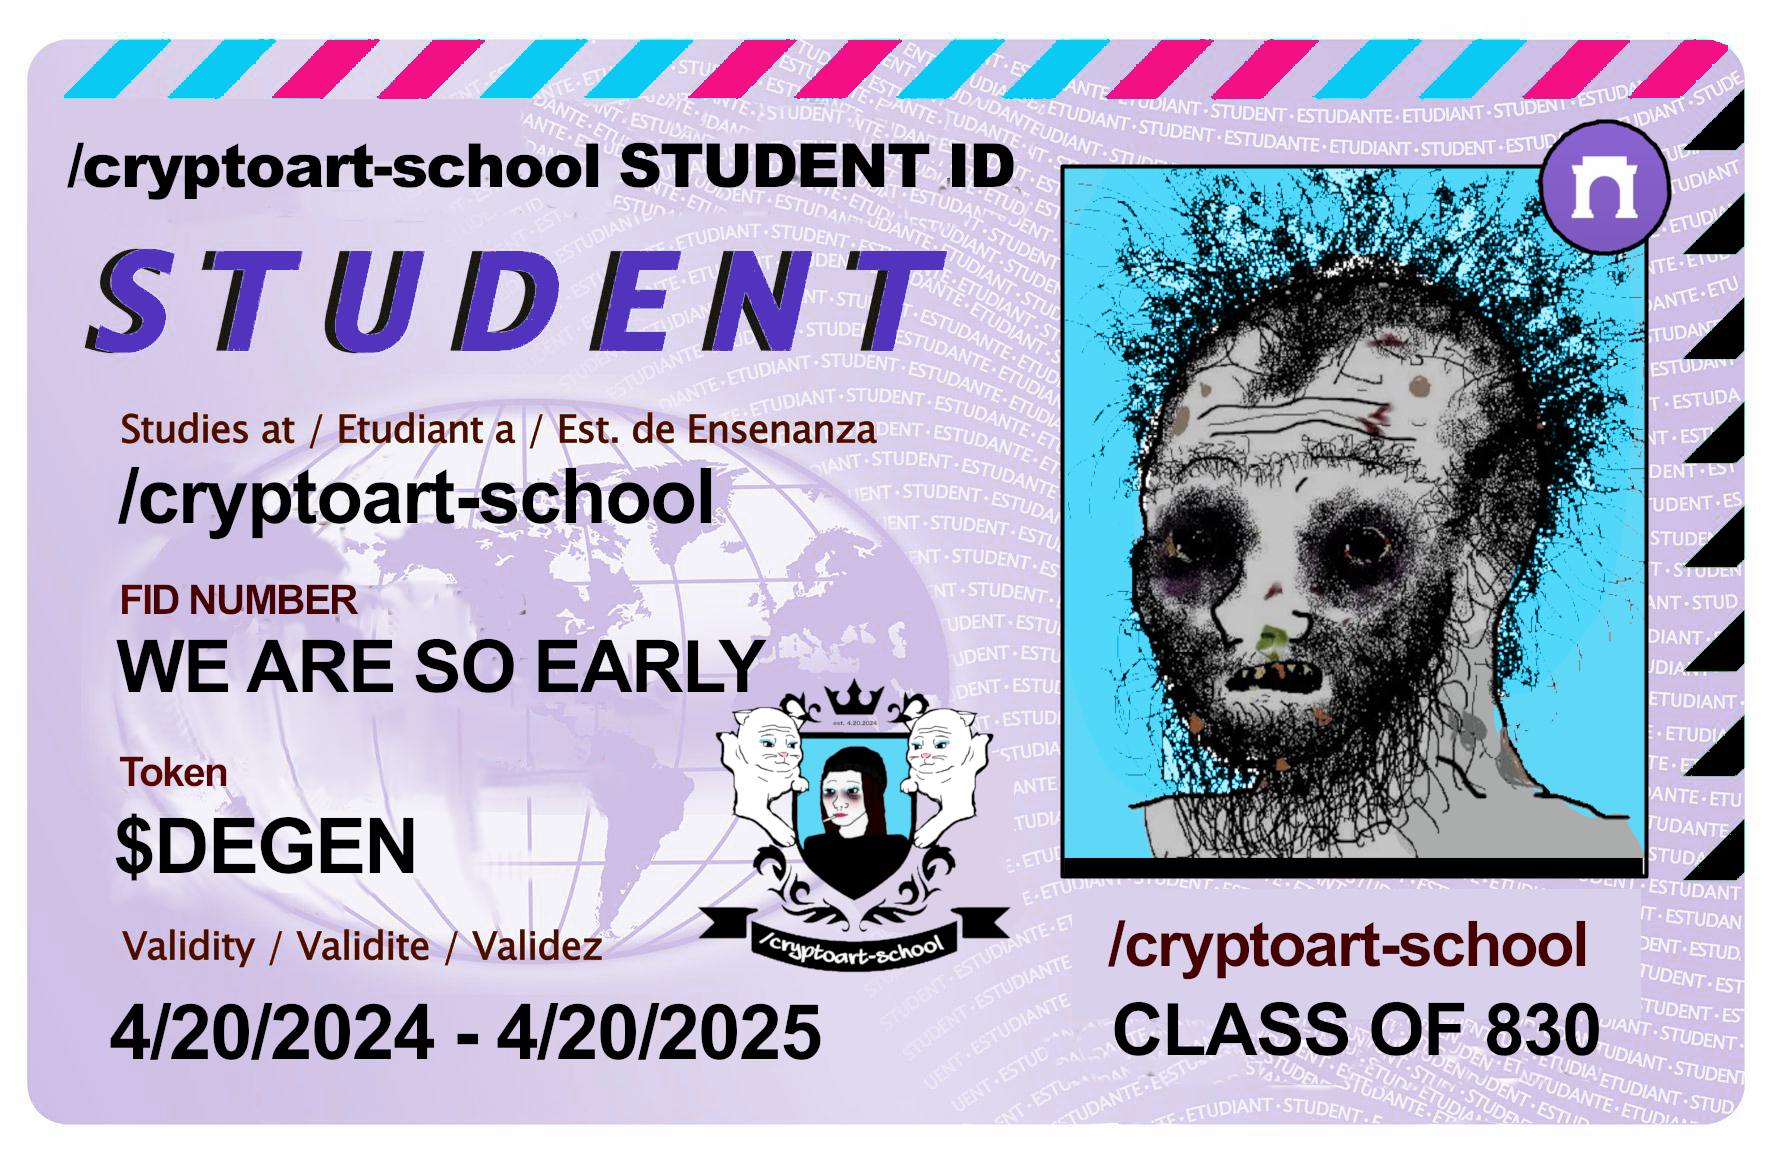 cryptoart-school student ID: boy